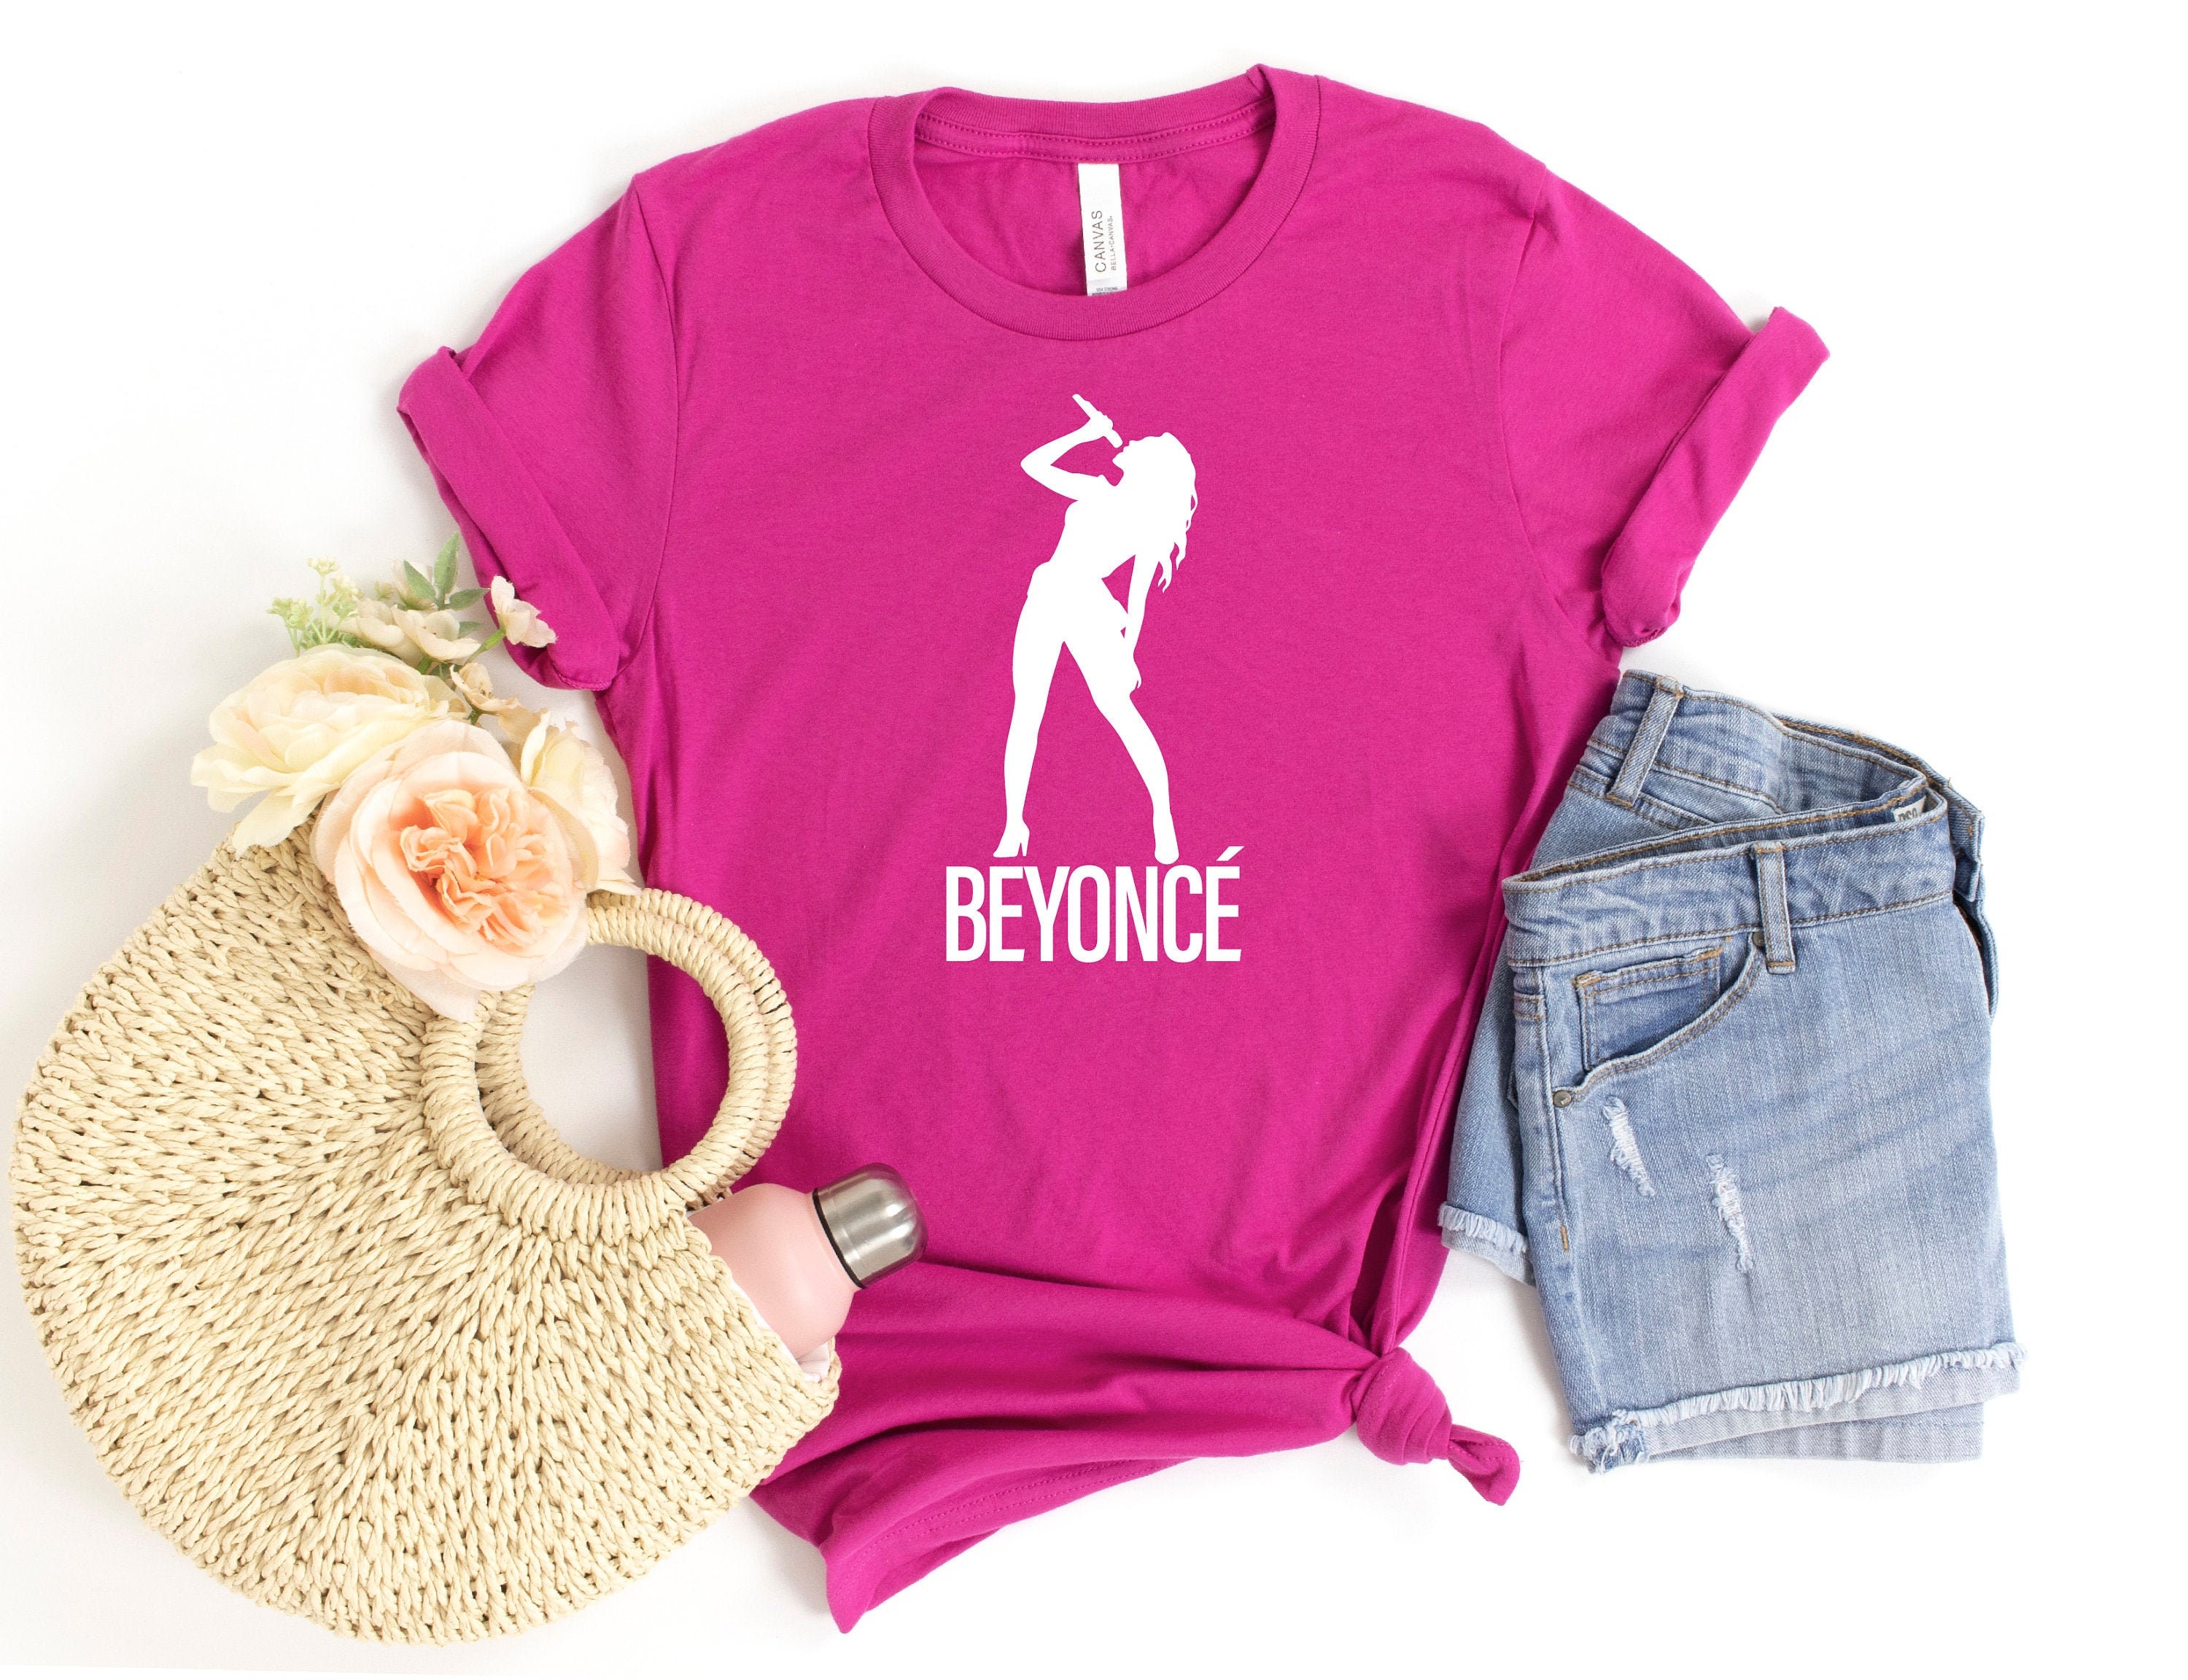 The Renaissance World Tour 2023 T-shirt, Beyonce Tour 2023 T-shirt